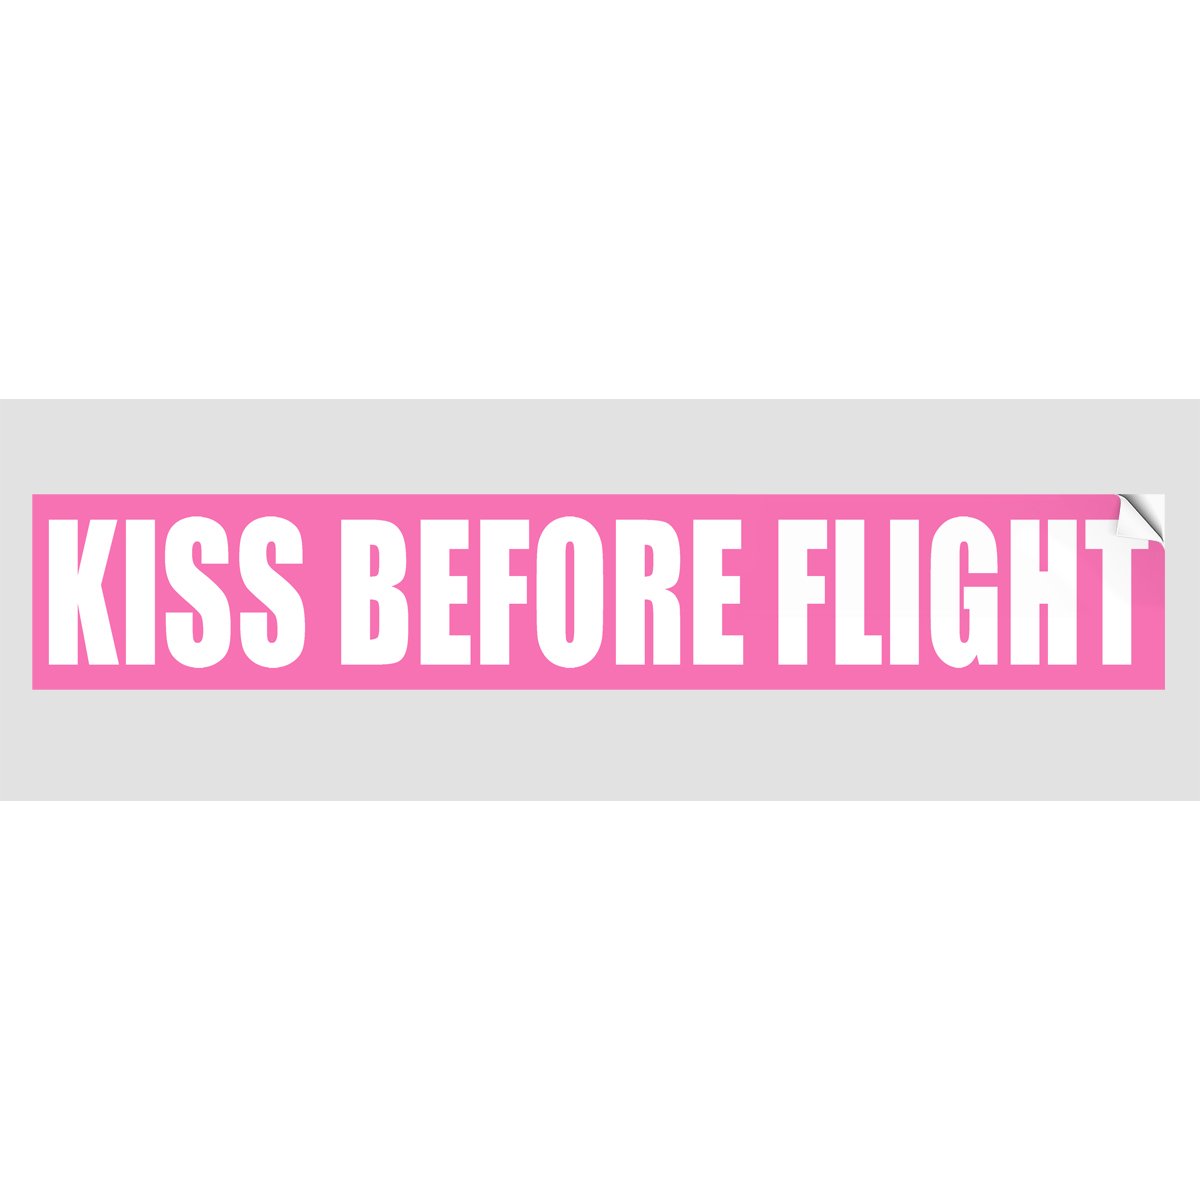 KISS BEFORE FLIGHT